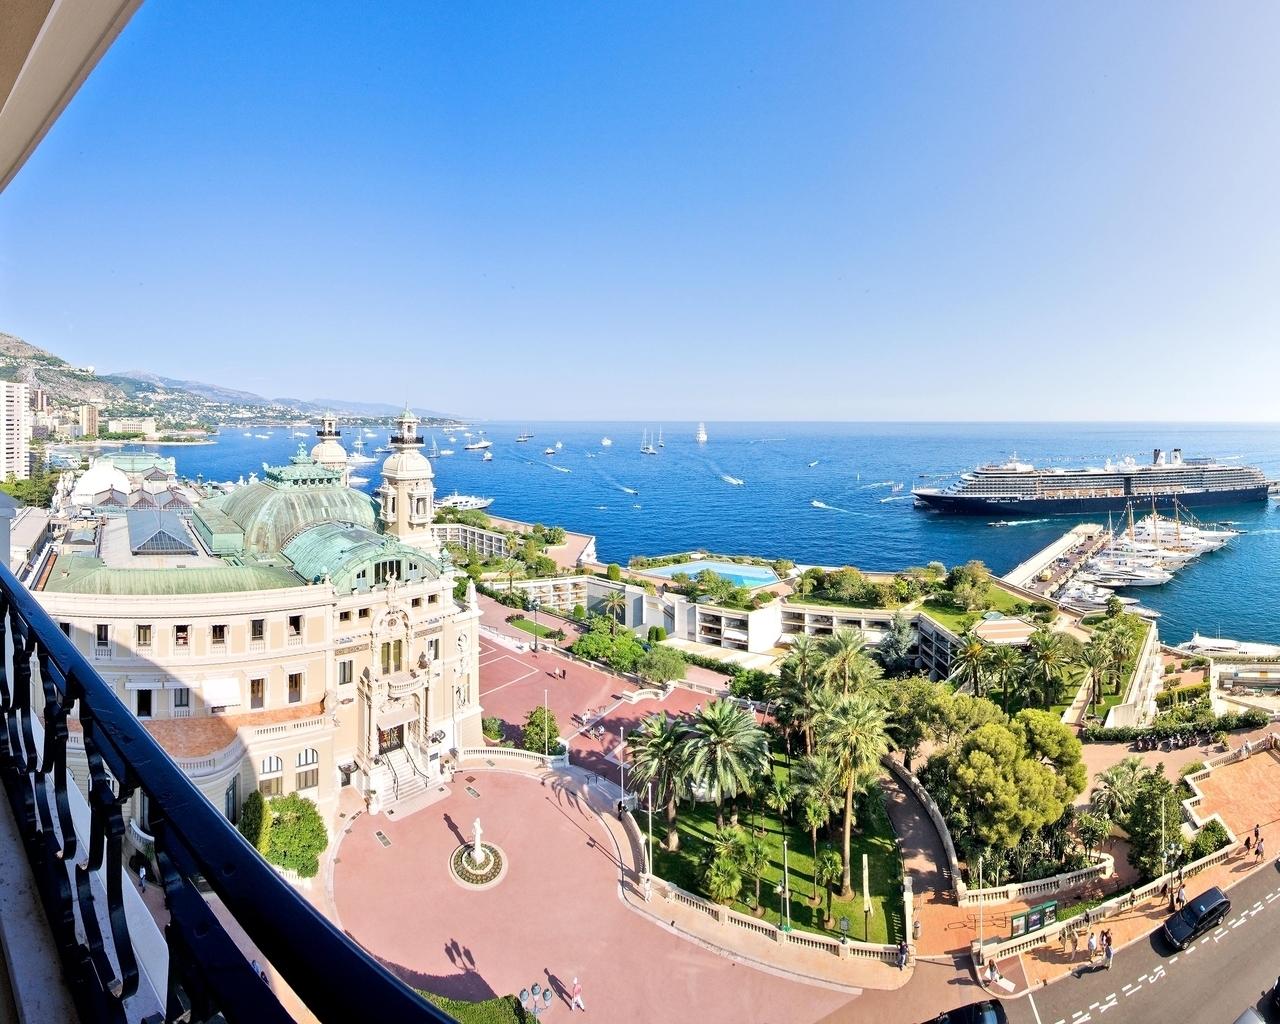 Monaco View for 1280 x 1024 resolution